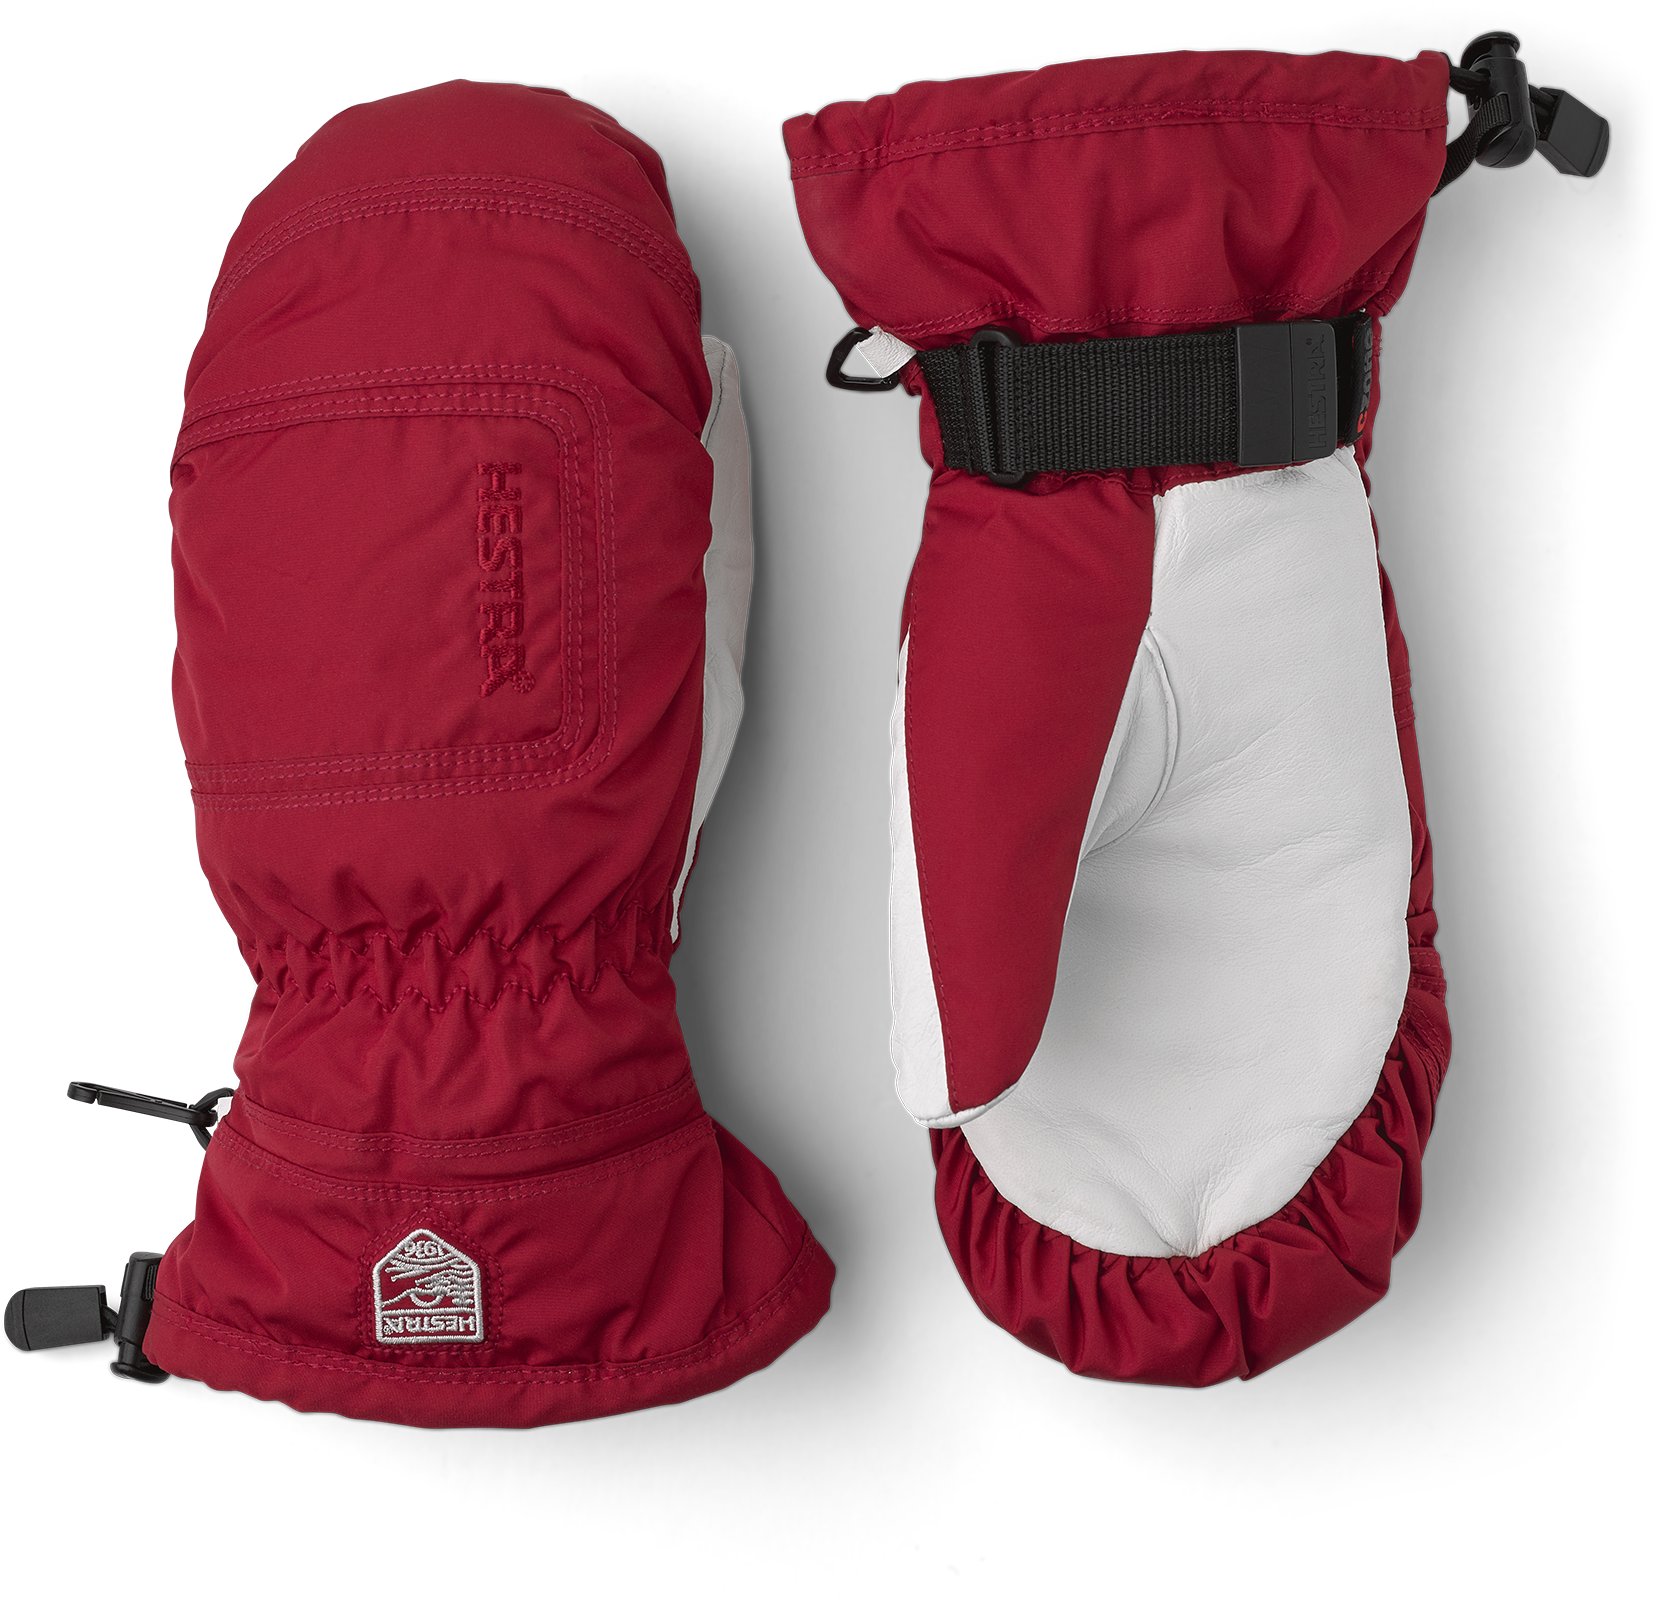 2020 HESTRA C Zone Powder Female Ladies Ski Glove Size 6 Black 32620 waterproof 